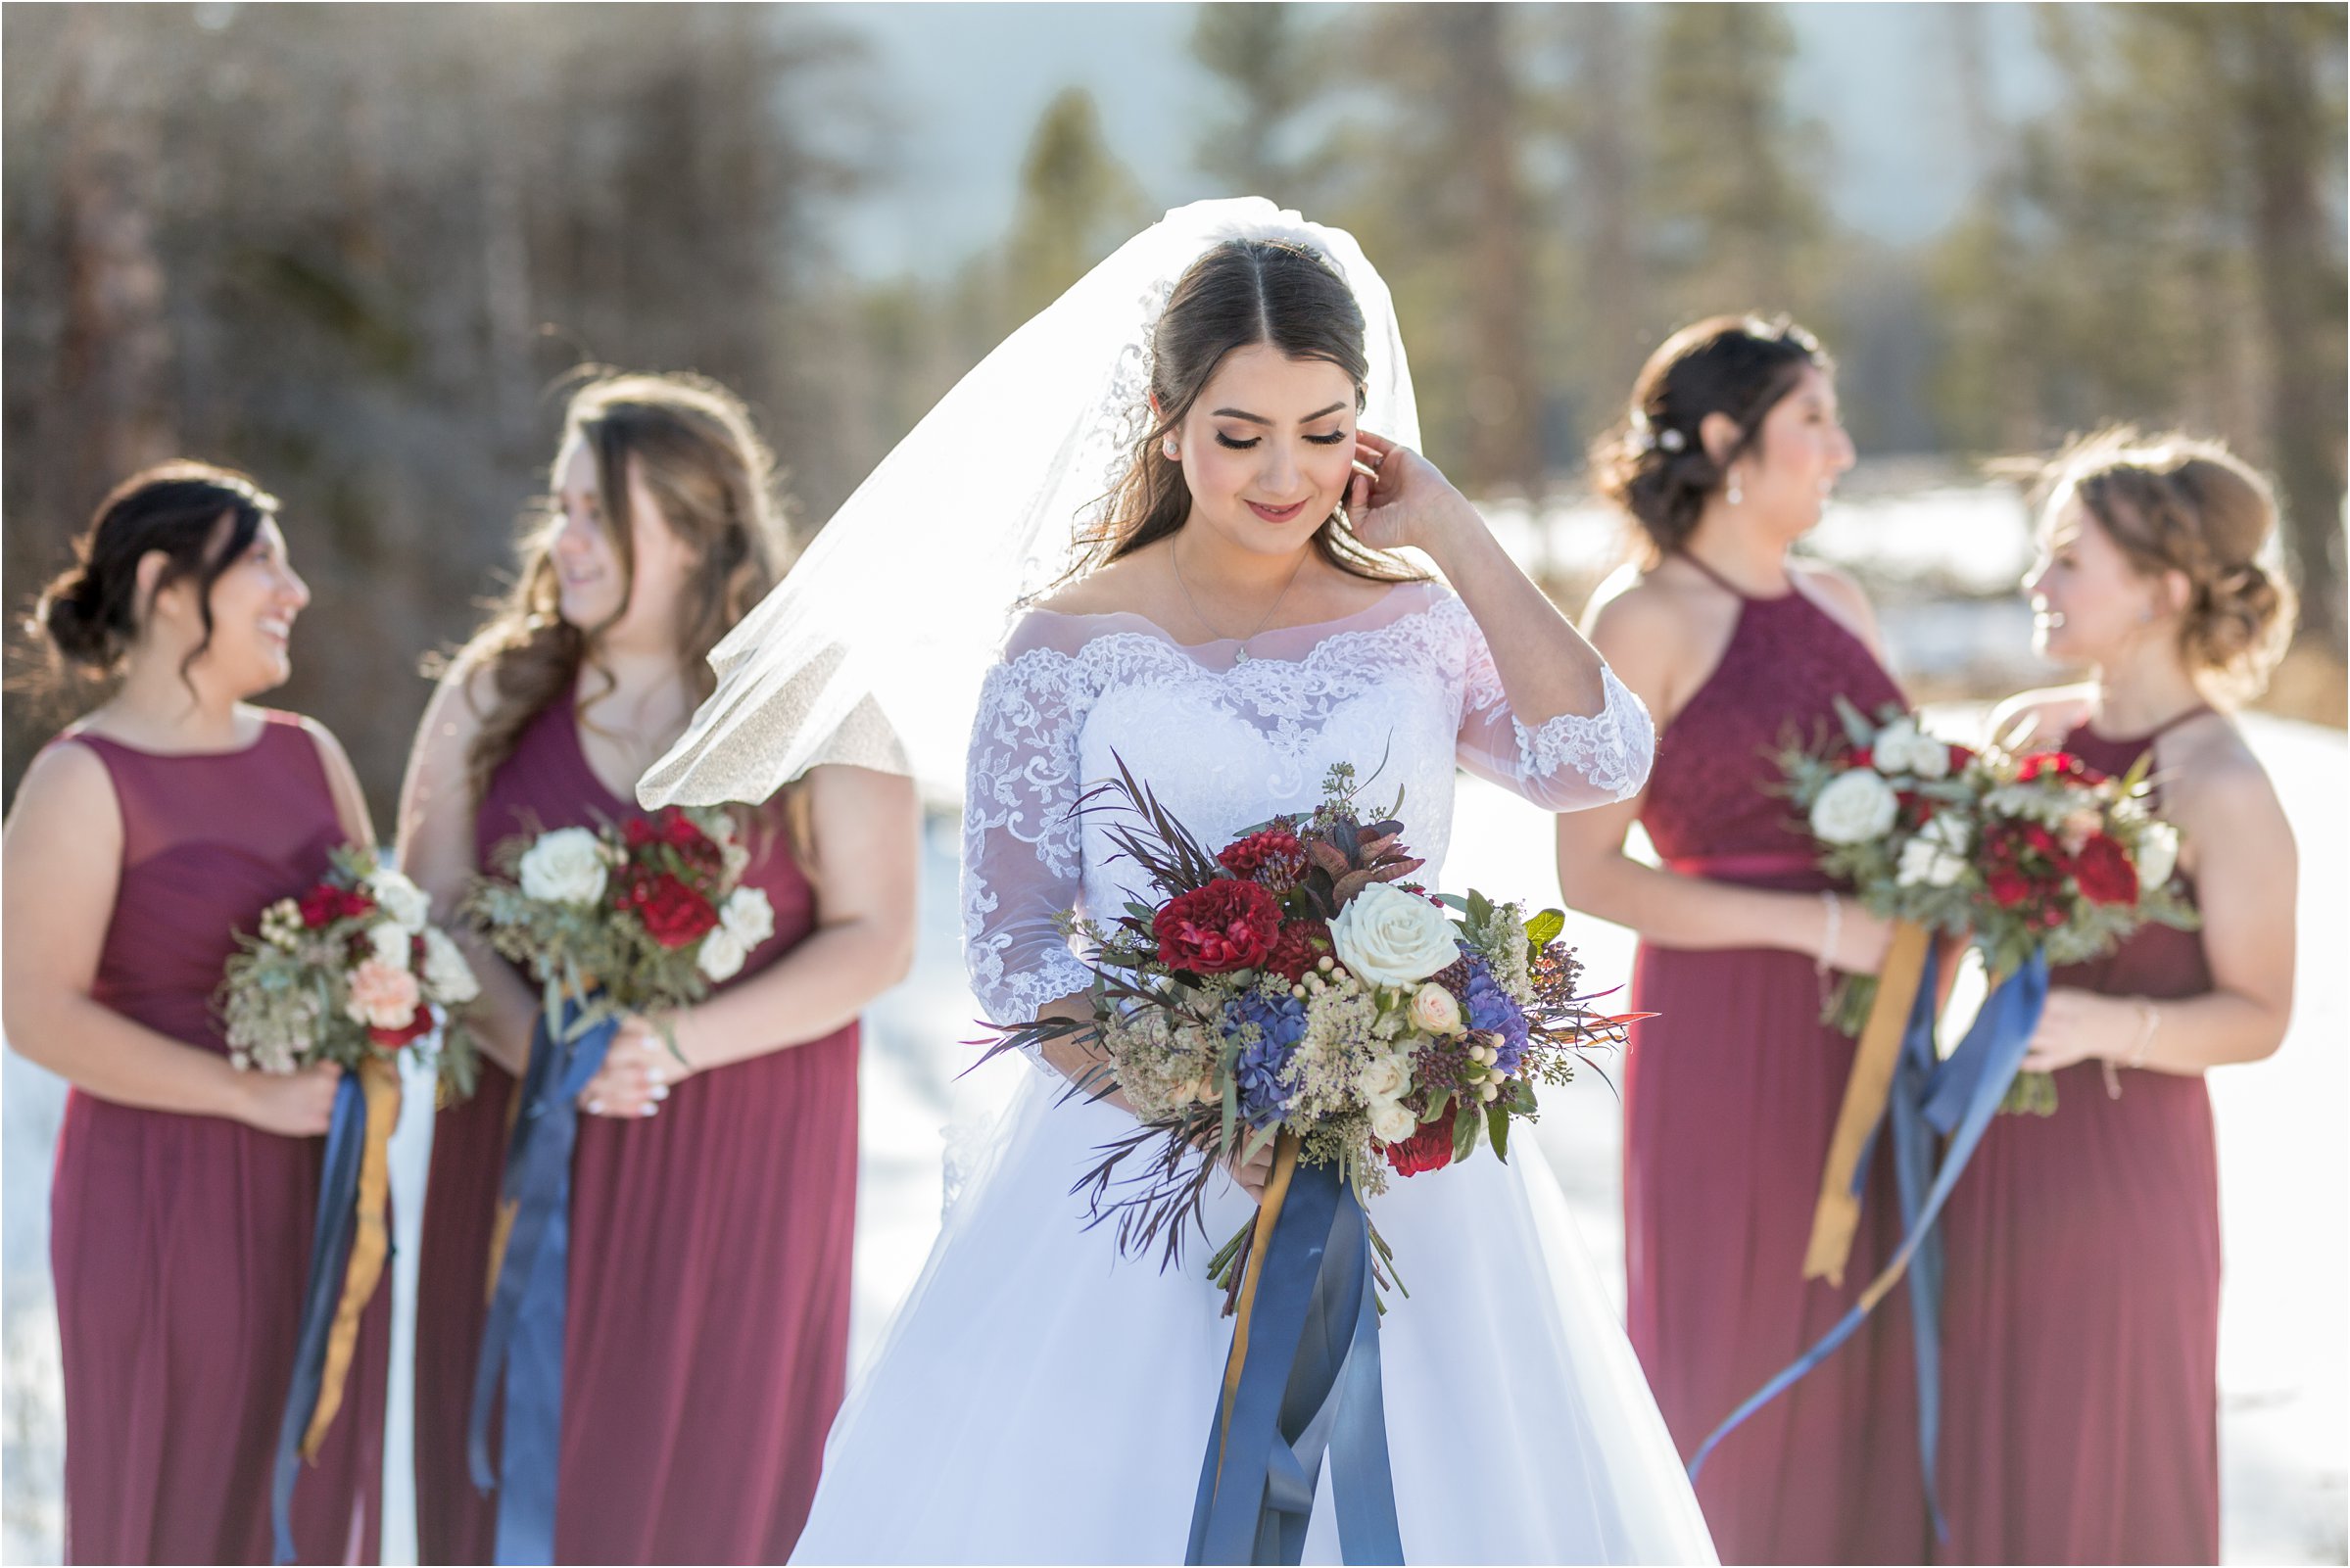 St. Catherine of Sienna Chapel and Wild Basin Lodge Wedding Near Allenspark, Colorado by Greeley, Colorado Wedding Photographer